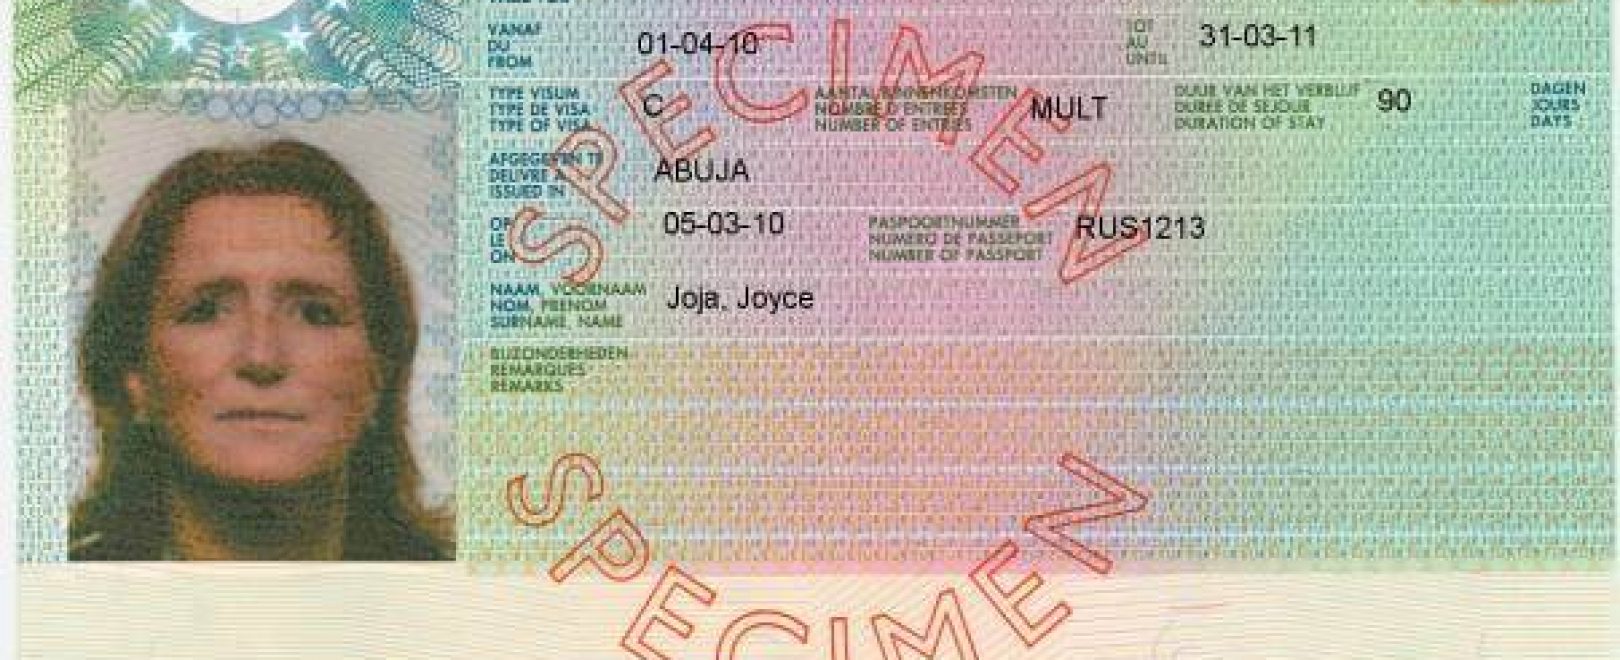 How To Read A Schengen Visa Sticker 40 Off 1708